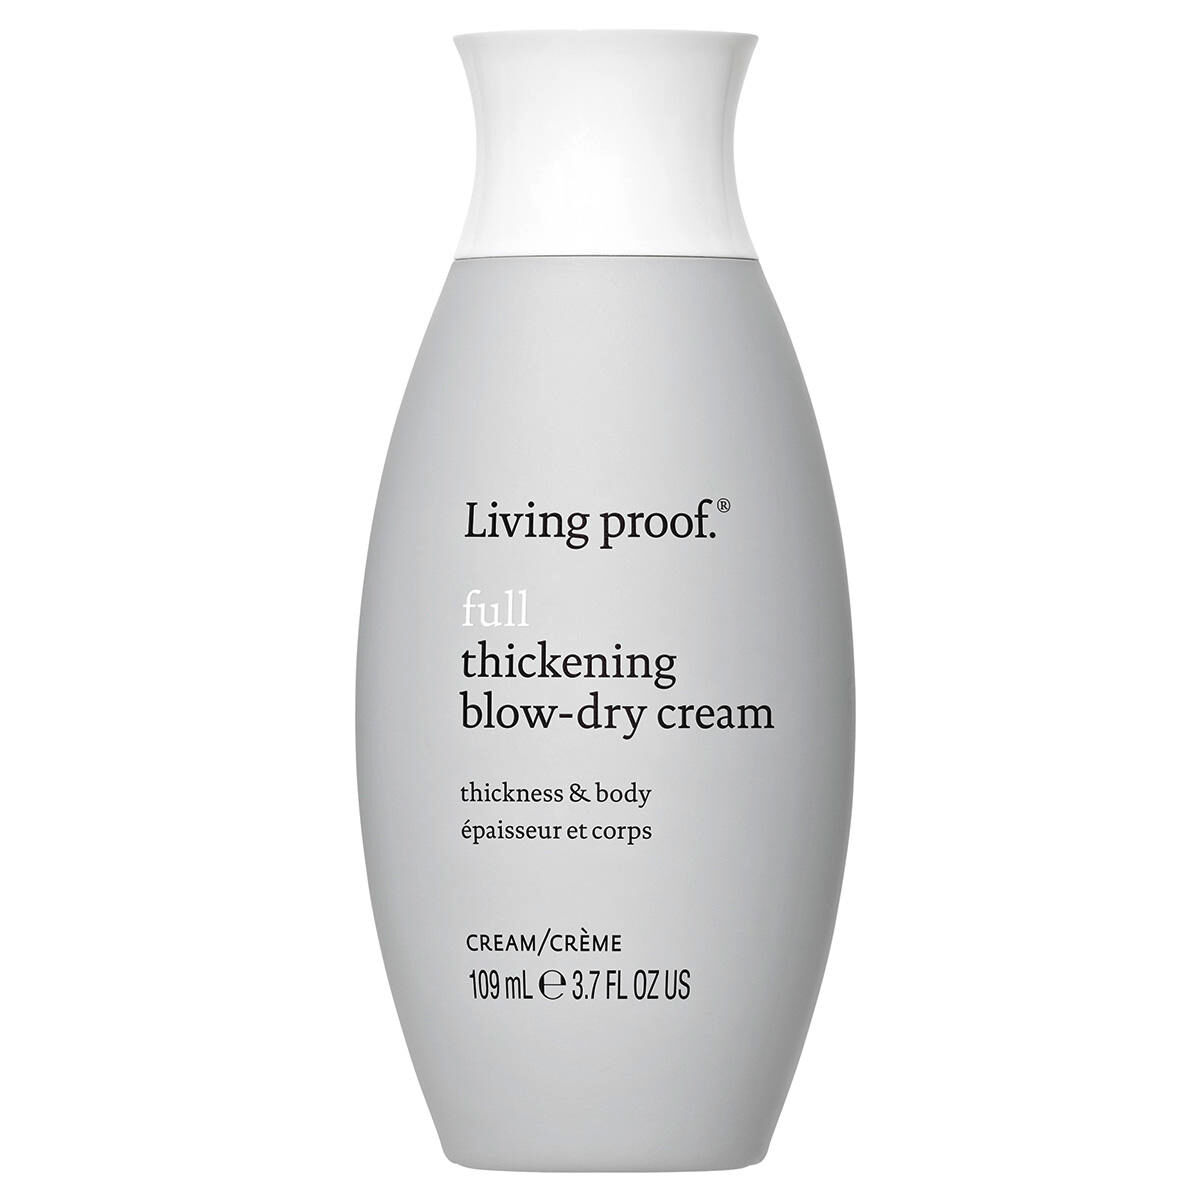 living proof full thickening blow-dry cream 109 ml